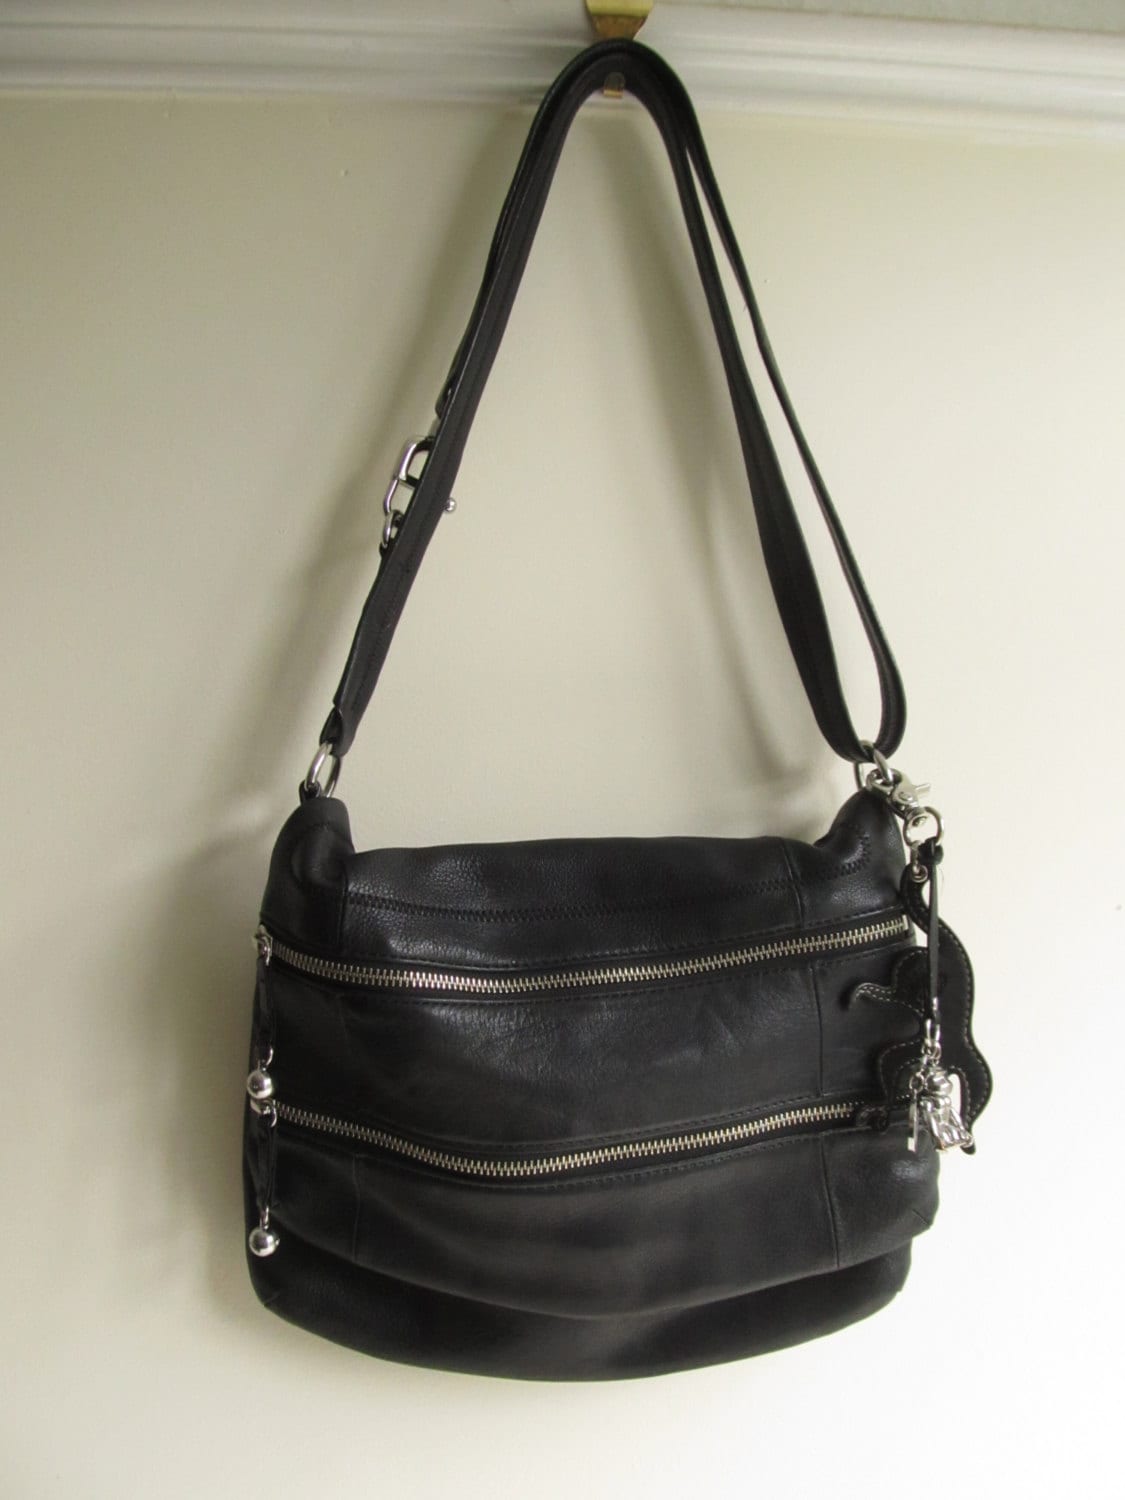 Leather Kipling black crossbody handbag shoulderbag by 1000Crows